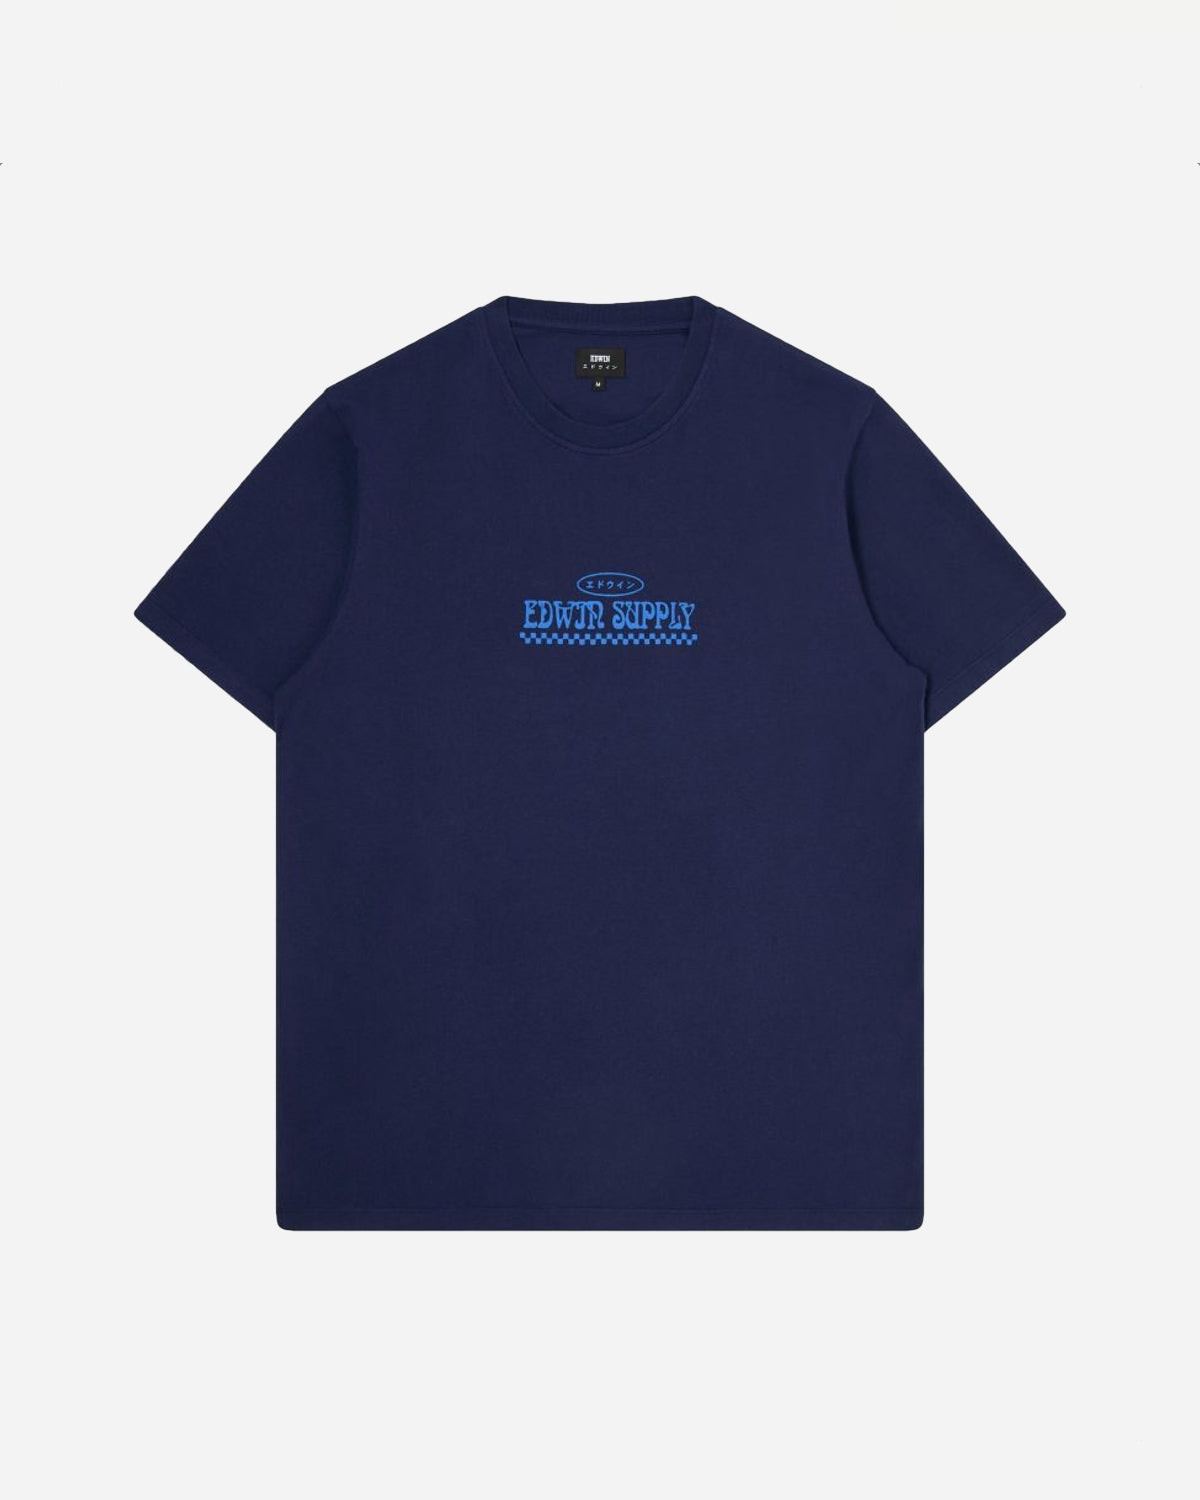 Show Some Love T-shirt - Maritime Blue